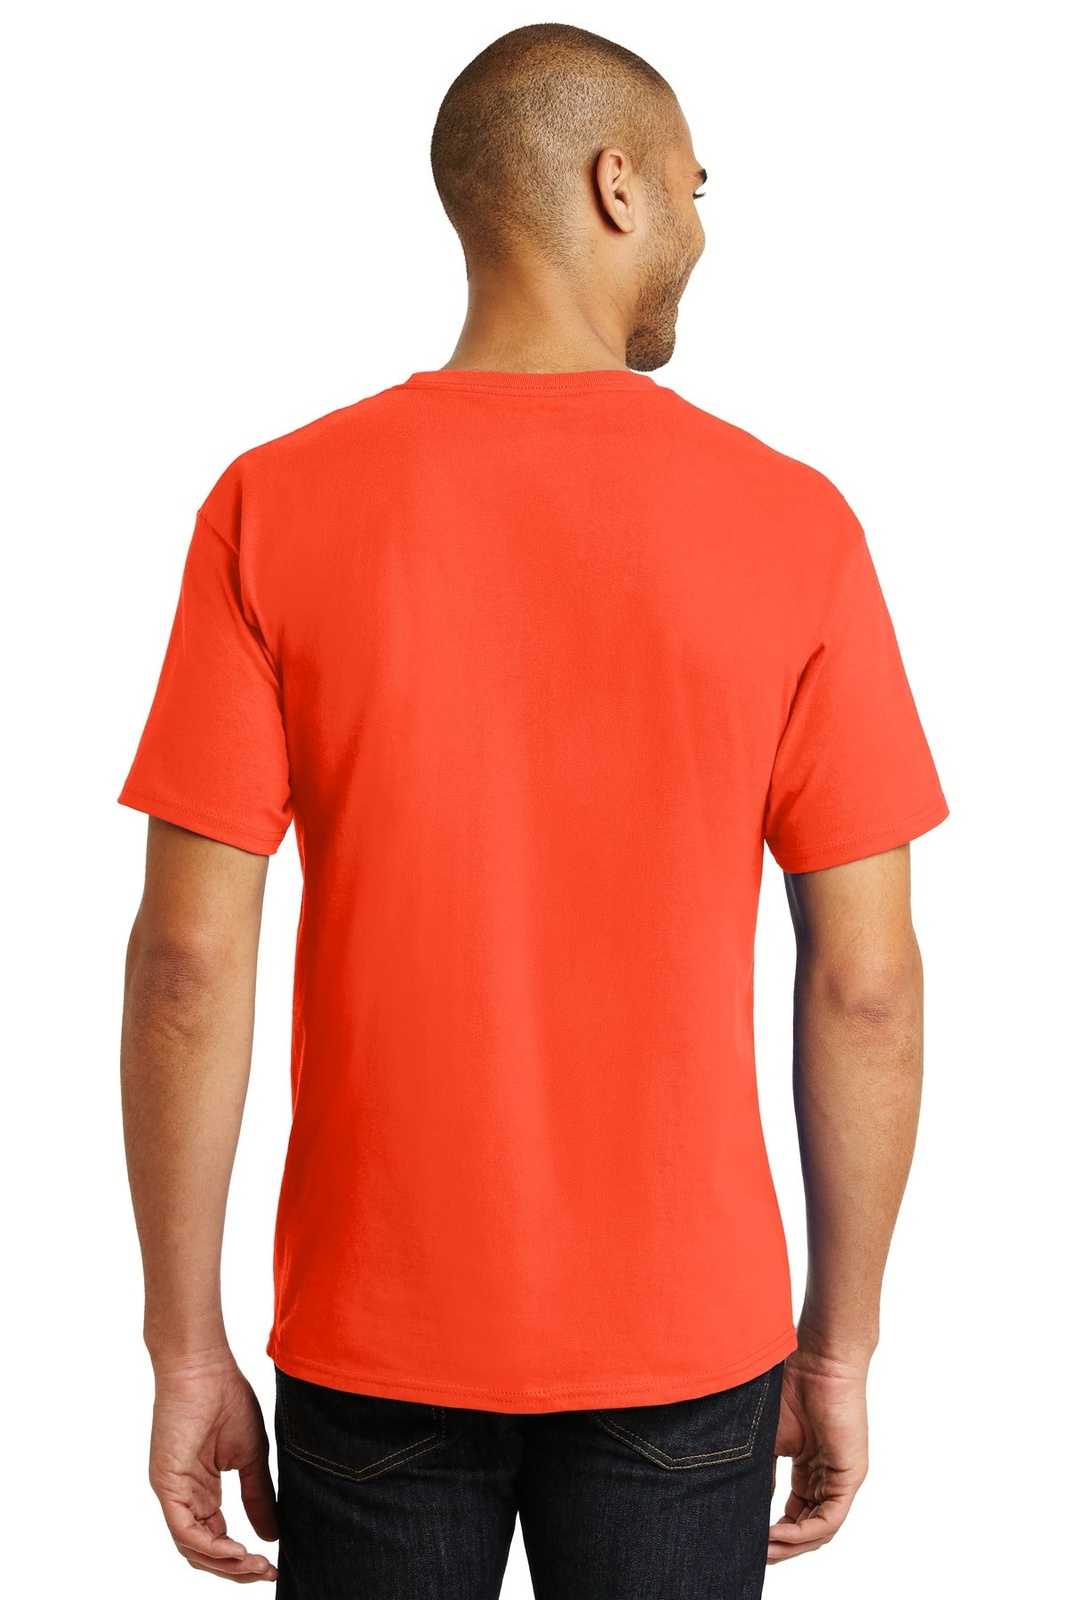 Hanes 5250 Tagless 100% Cotton T-Shirt - Orange - HIT a Double